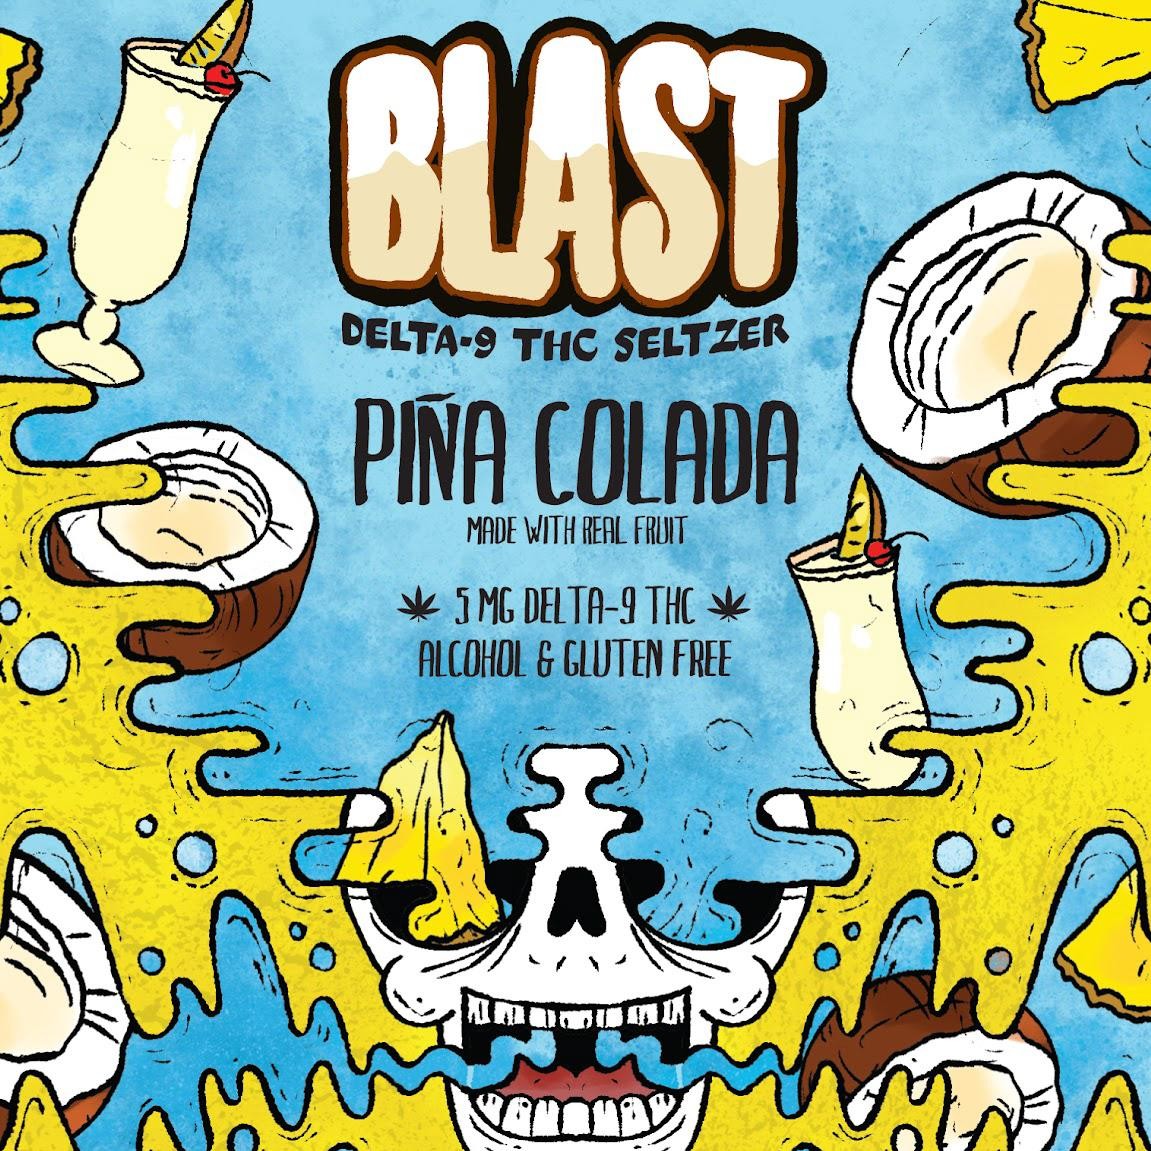 The Brewing Projekt - Blast: Piña Colada (Non-Alcoholic / 5mg Delta-9 THC)